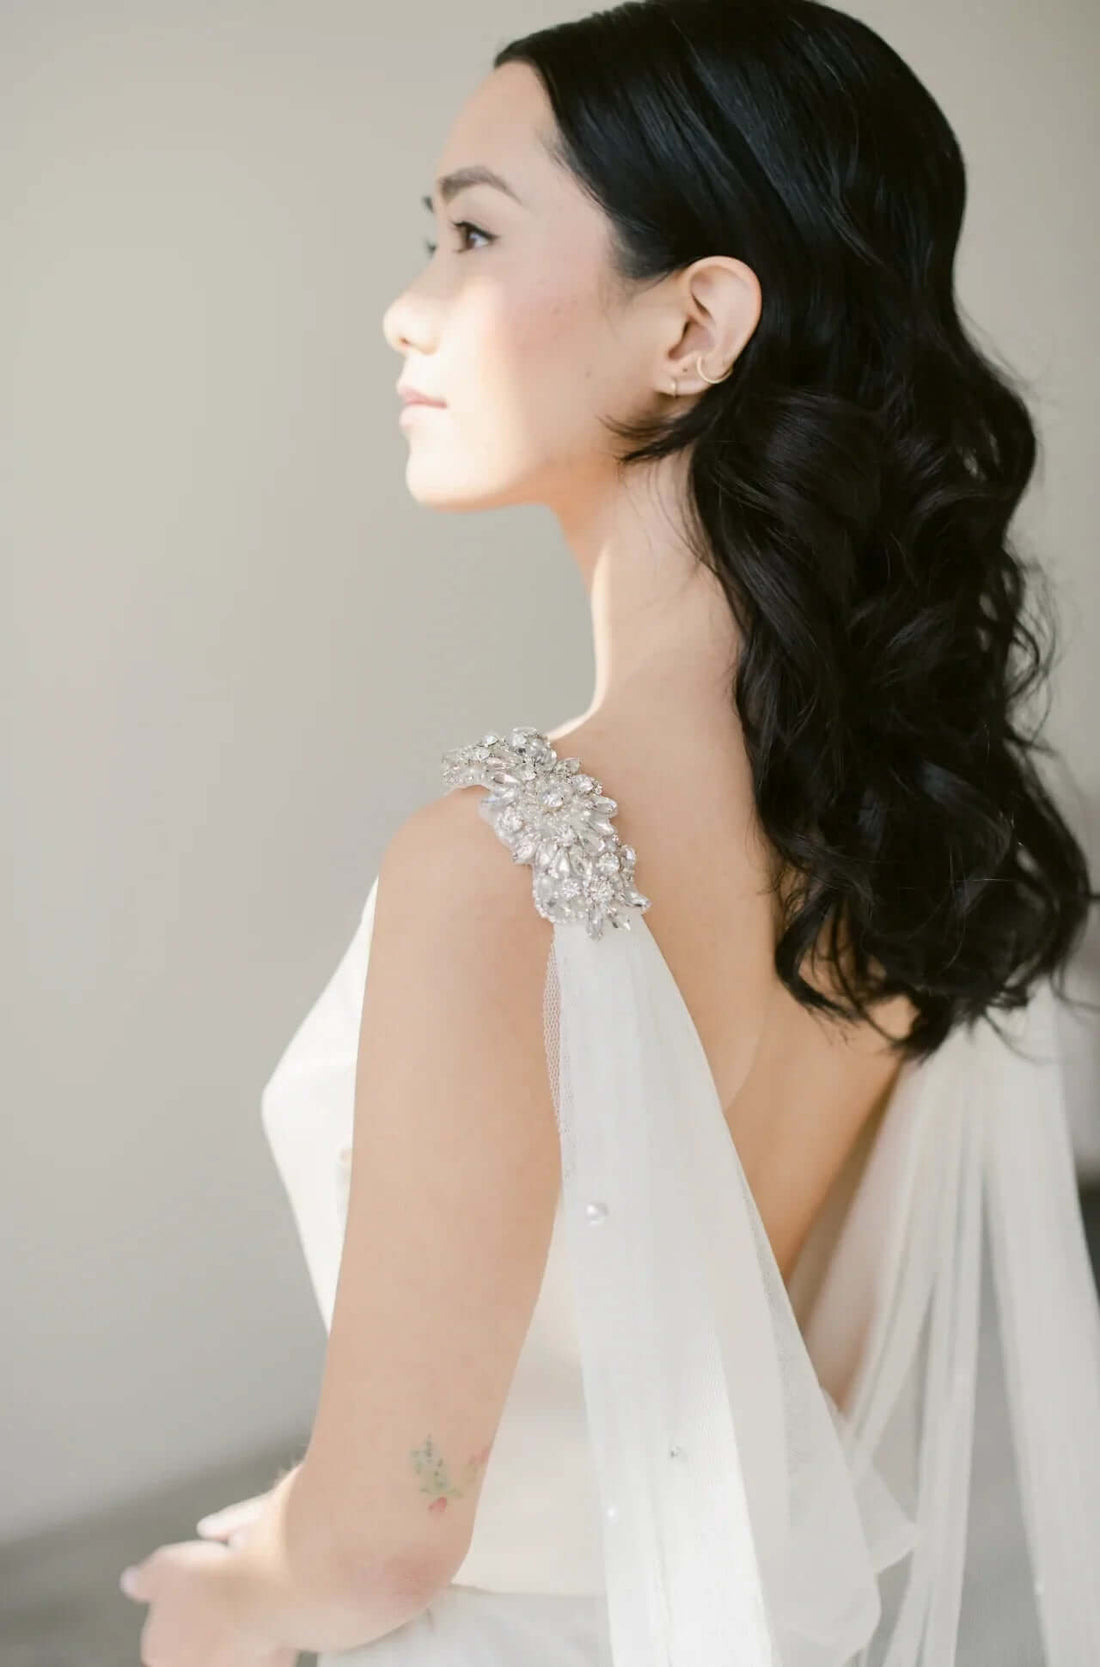 Featured product: Bridal drape cape veil with adornments Tessa Kim